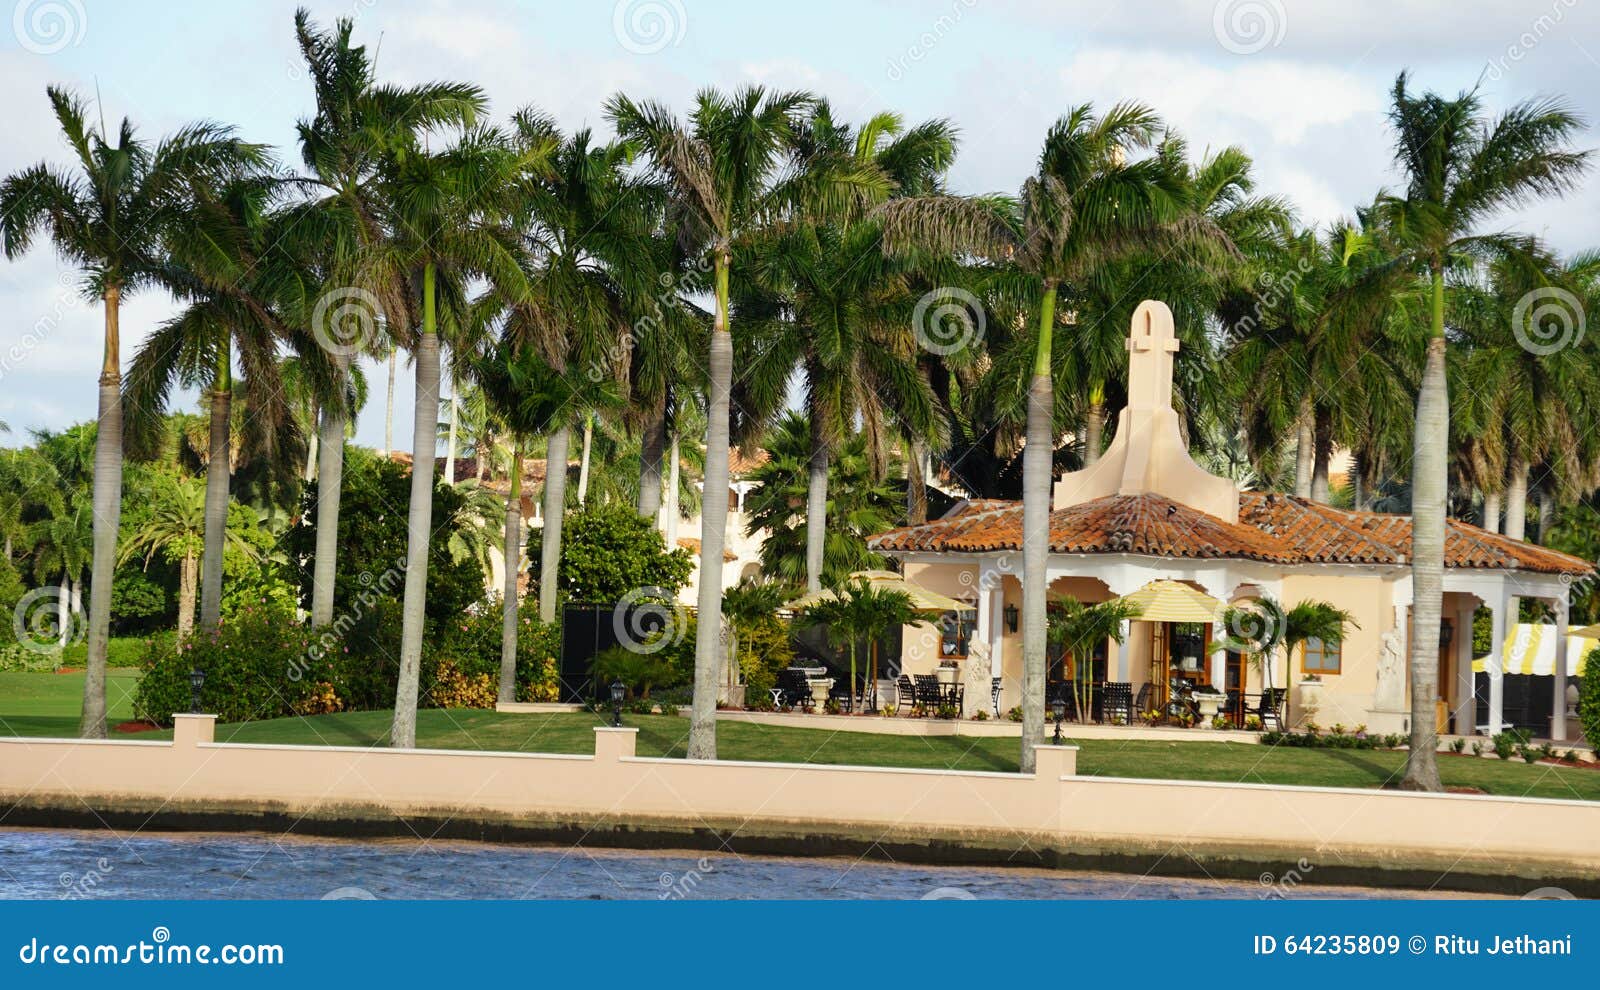 mar-a-lago resort, palm beach, florida